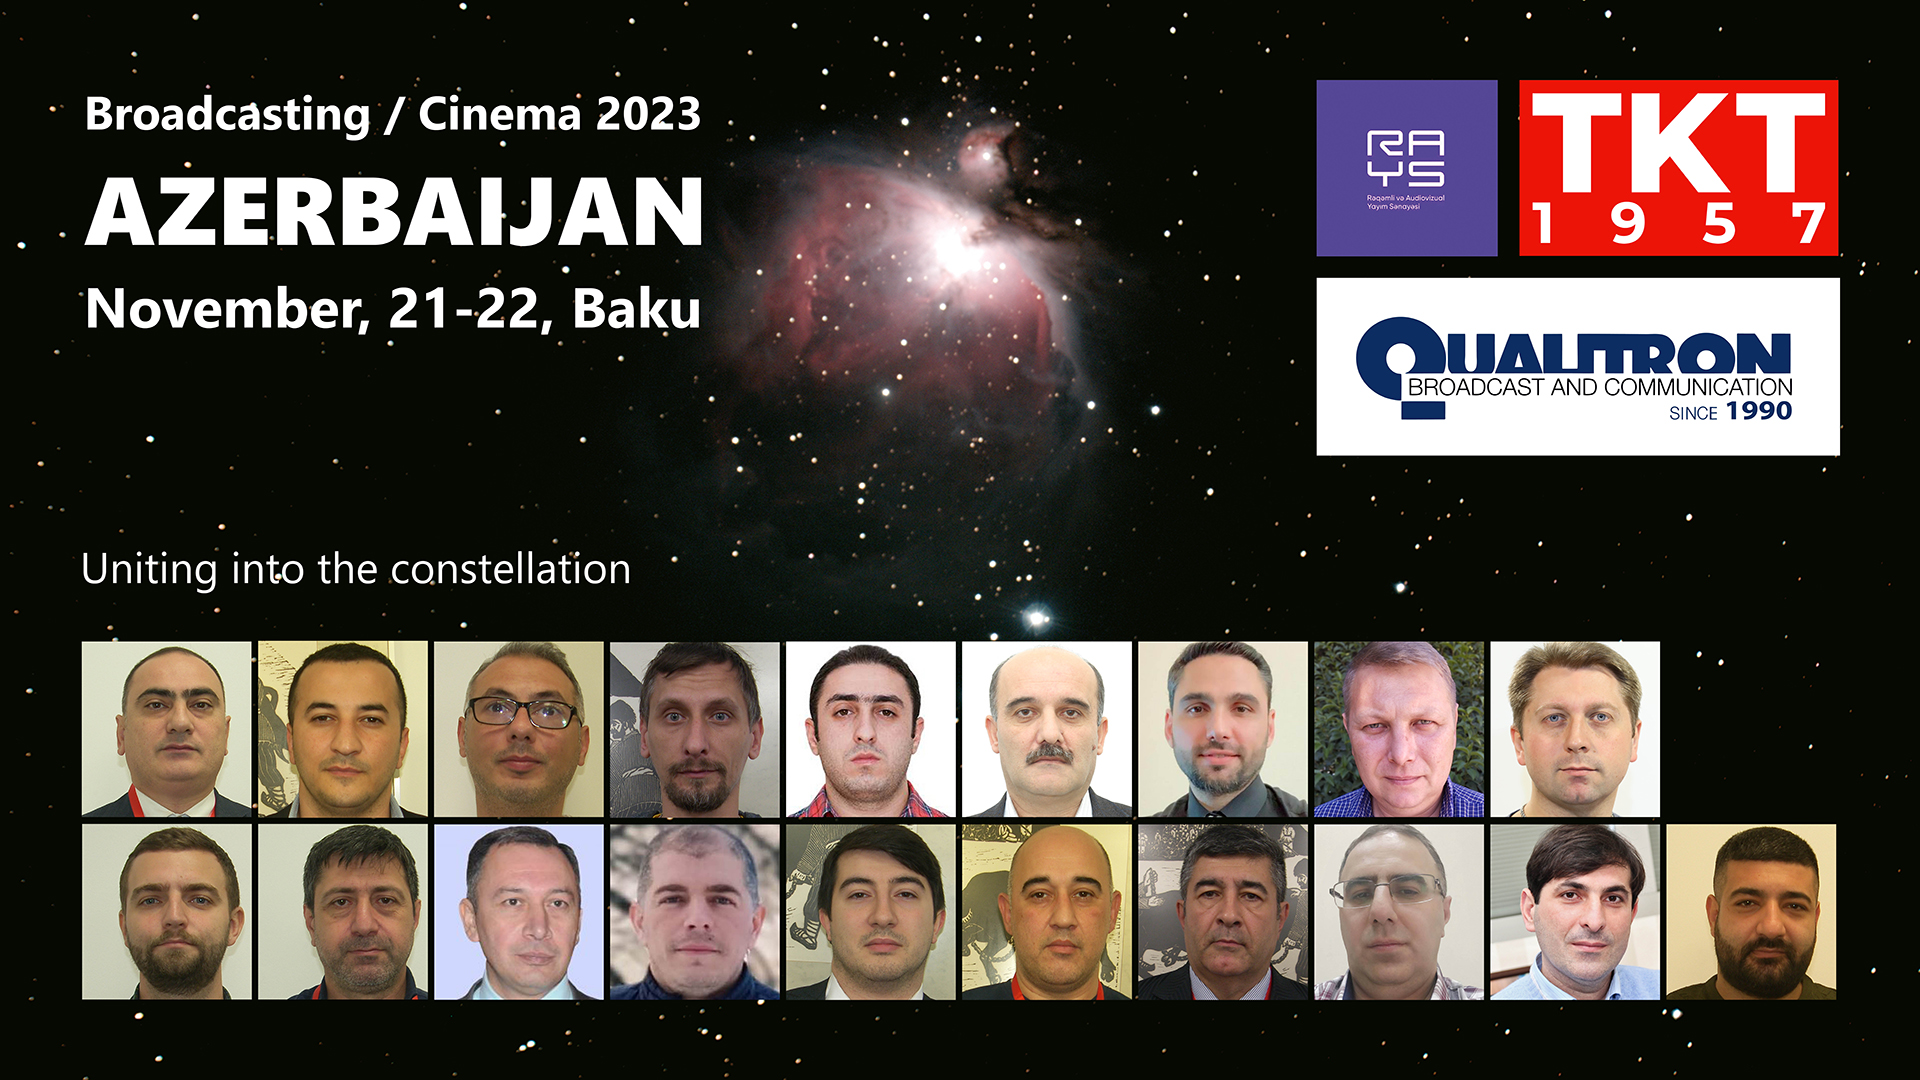 Broadcasting / Cinema 2023 Azerbaijan